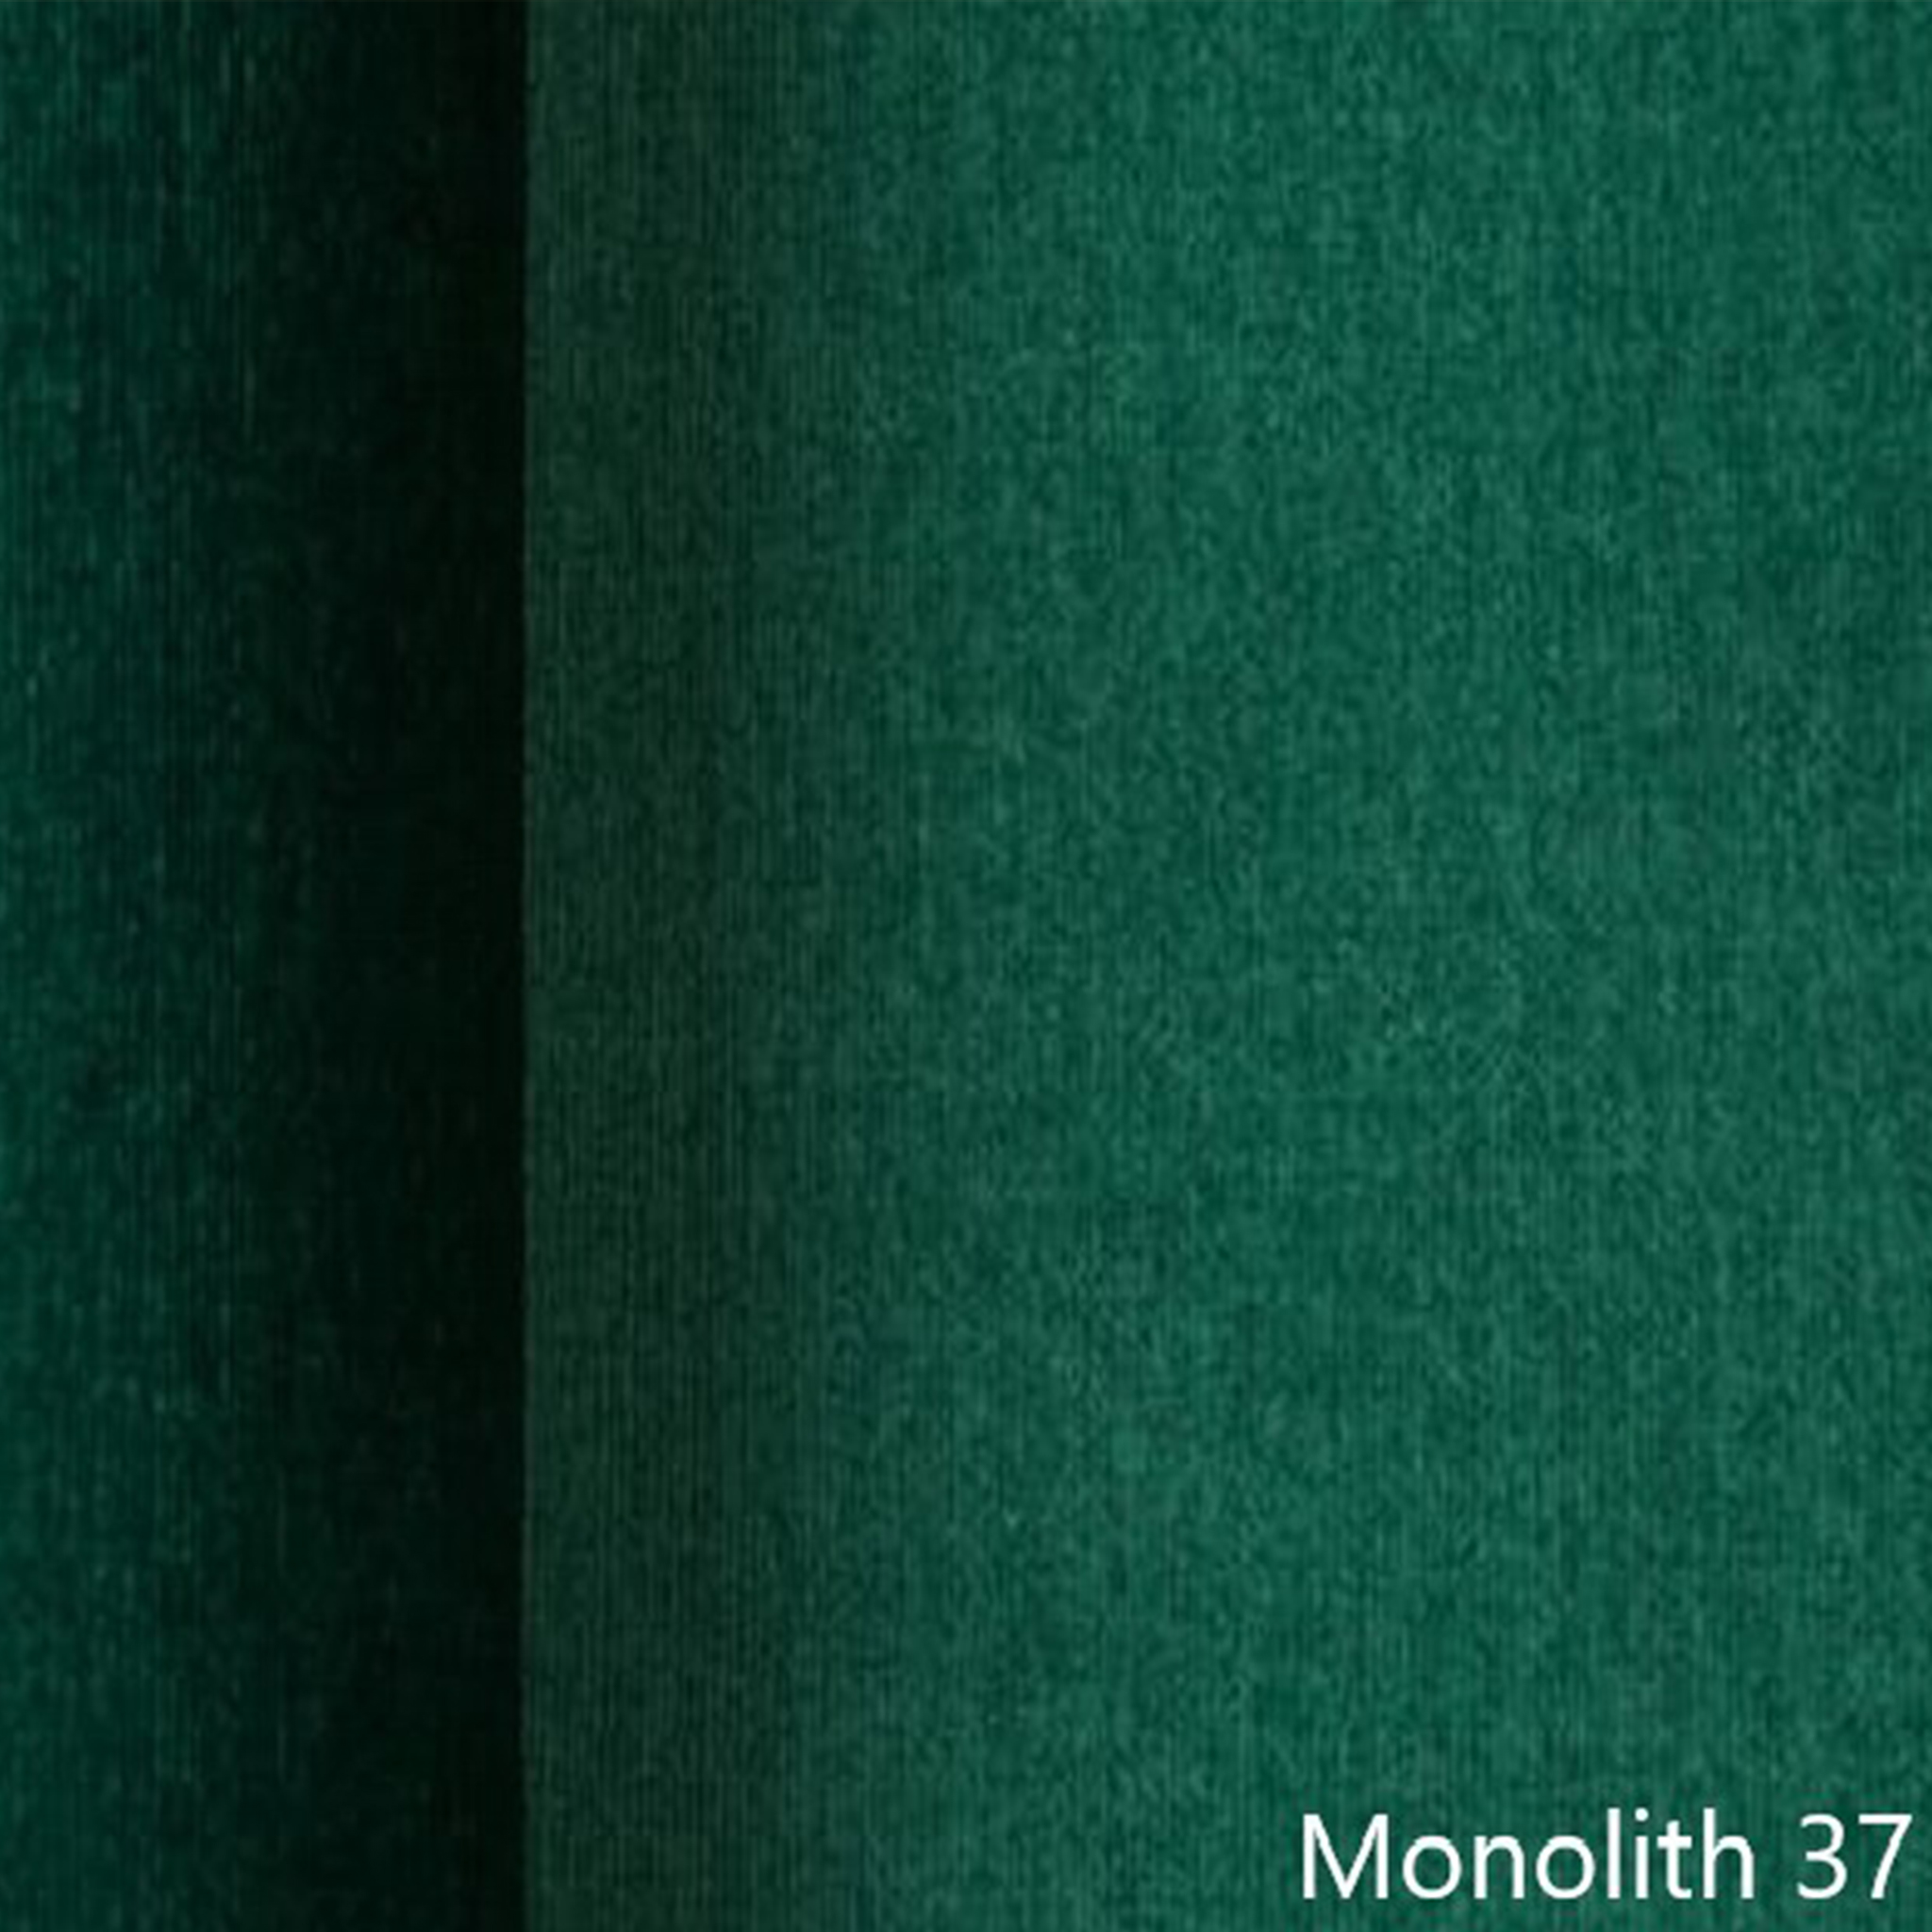 GR. 2 – Monolith 37